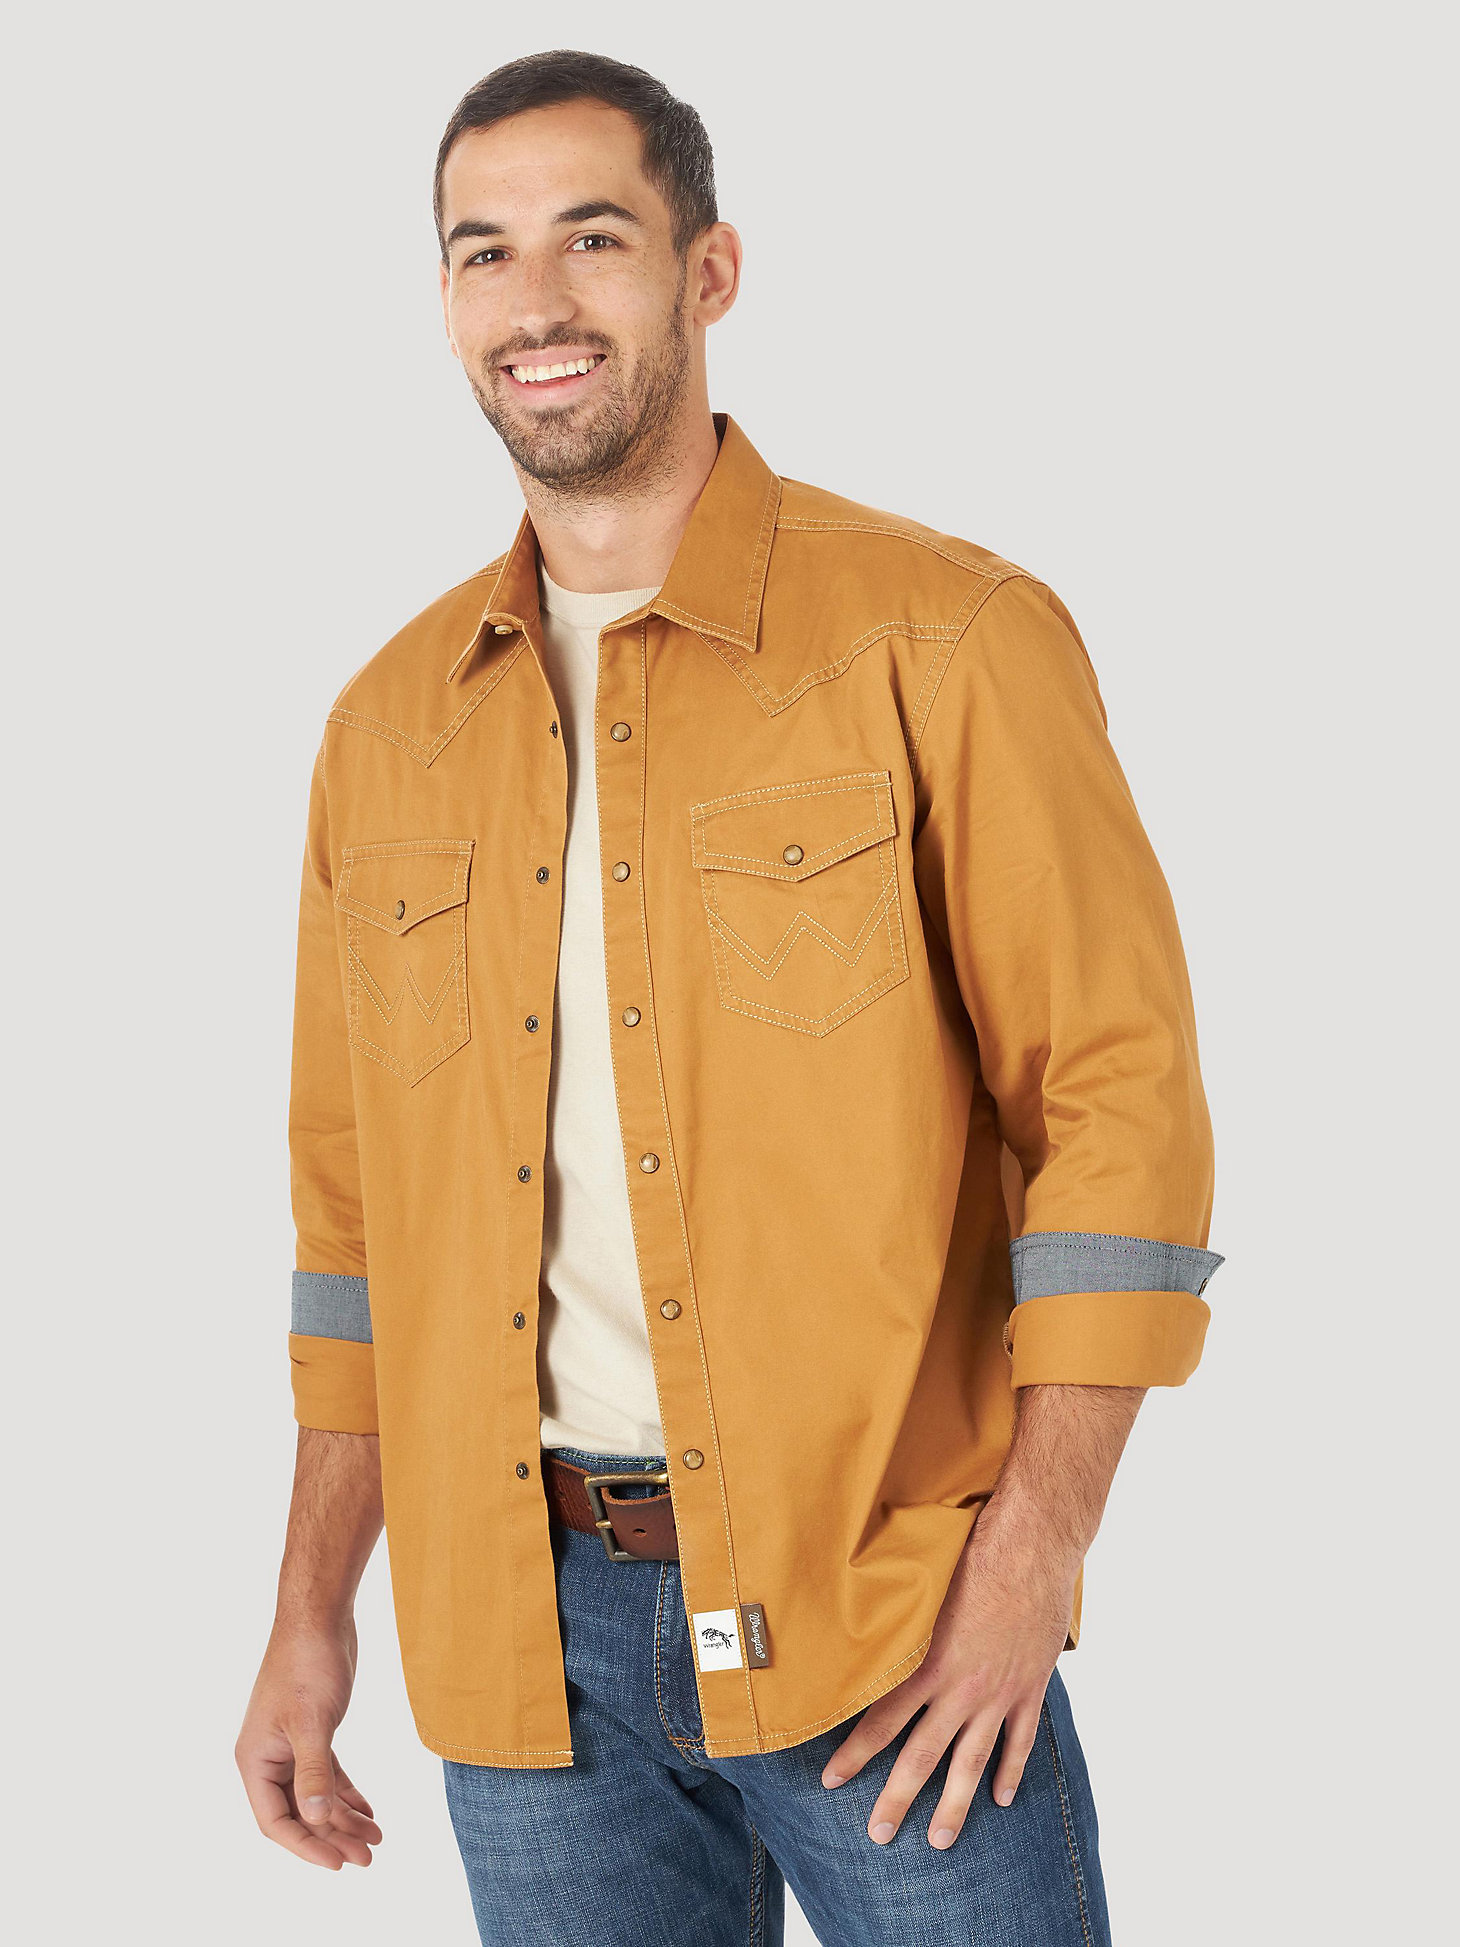 Men's Wrangler Retro® Premium Long Sleeve Western Snap Solid Shirt in Rawhide alternative view 1